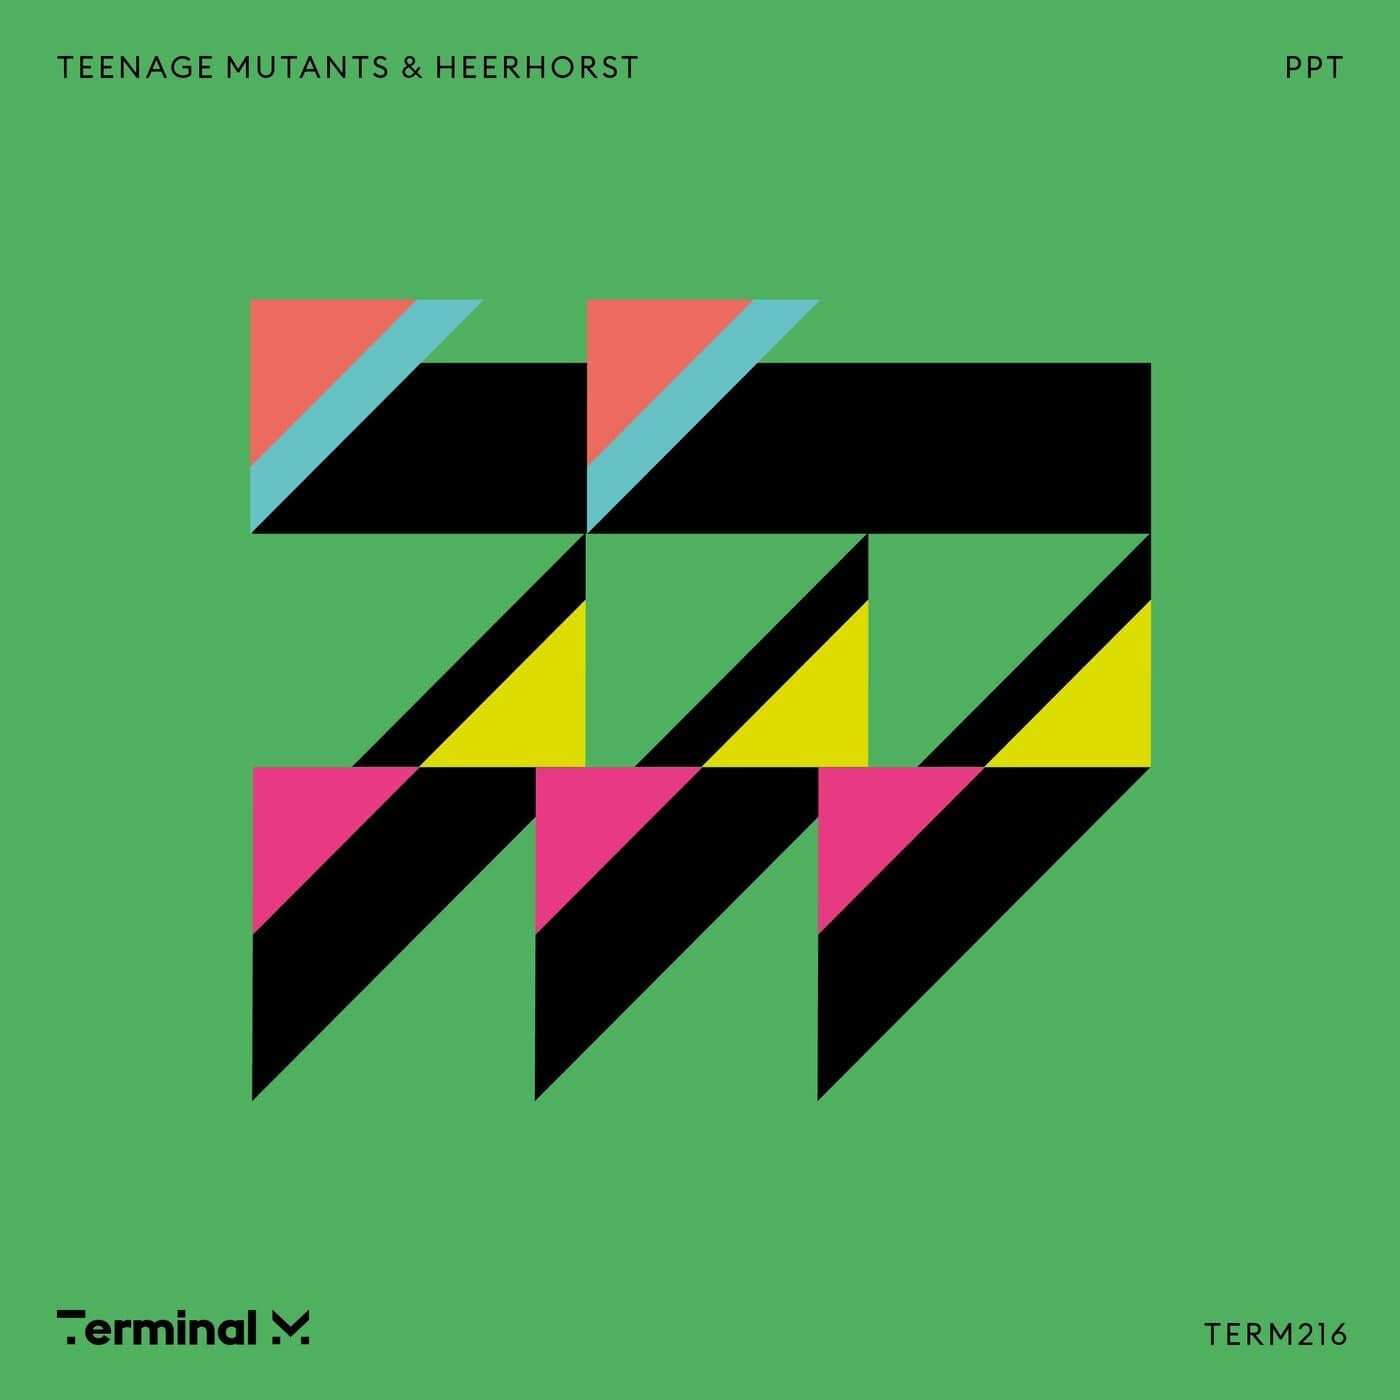 image cover: Heerhorst, Teenage Mutants - PPT / TERM216